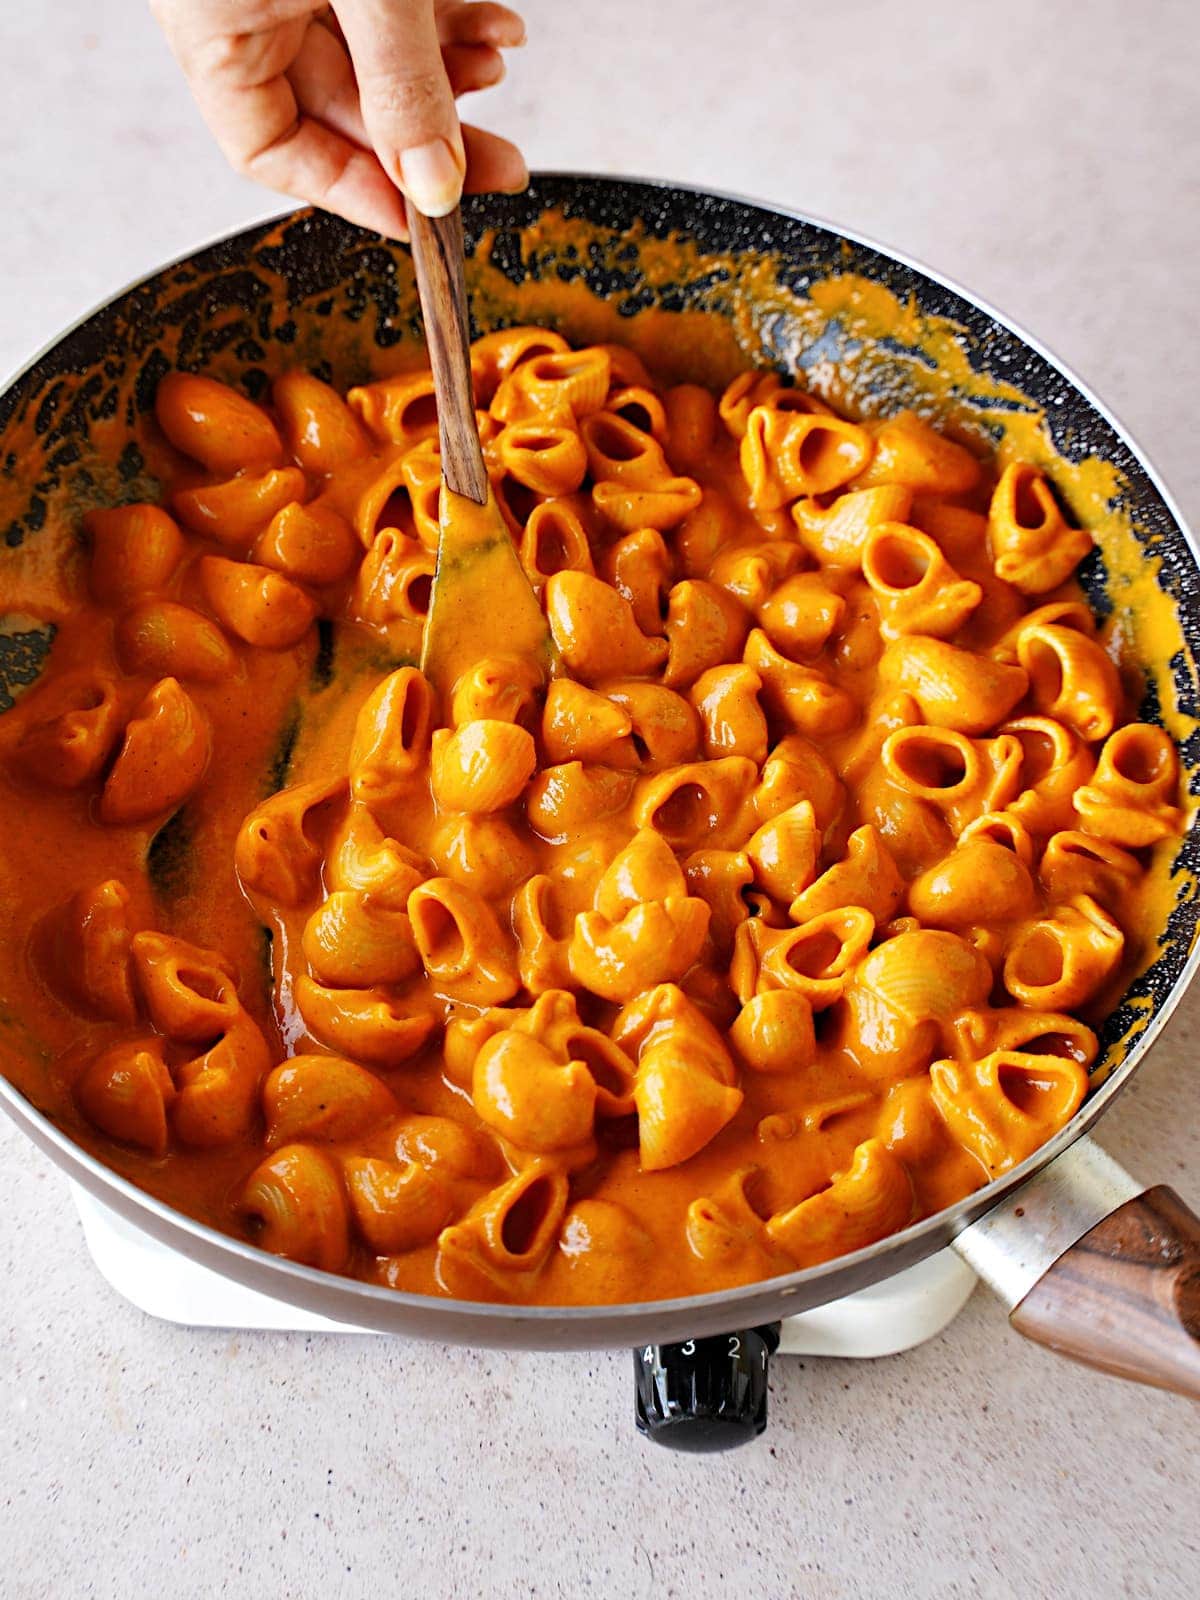 orange sauce with pasta in skillet